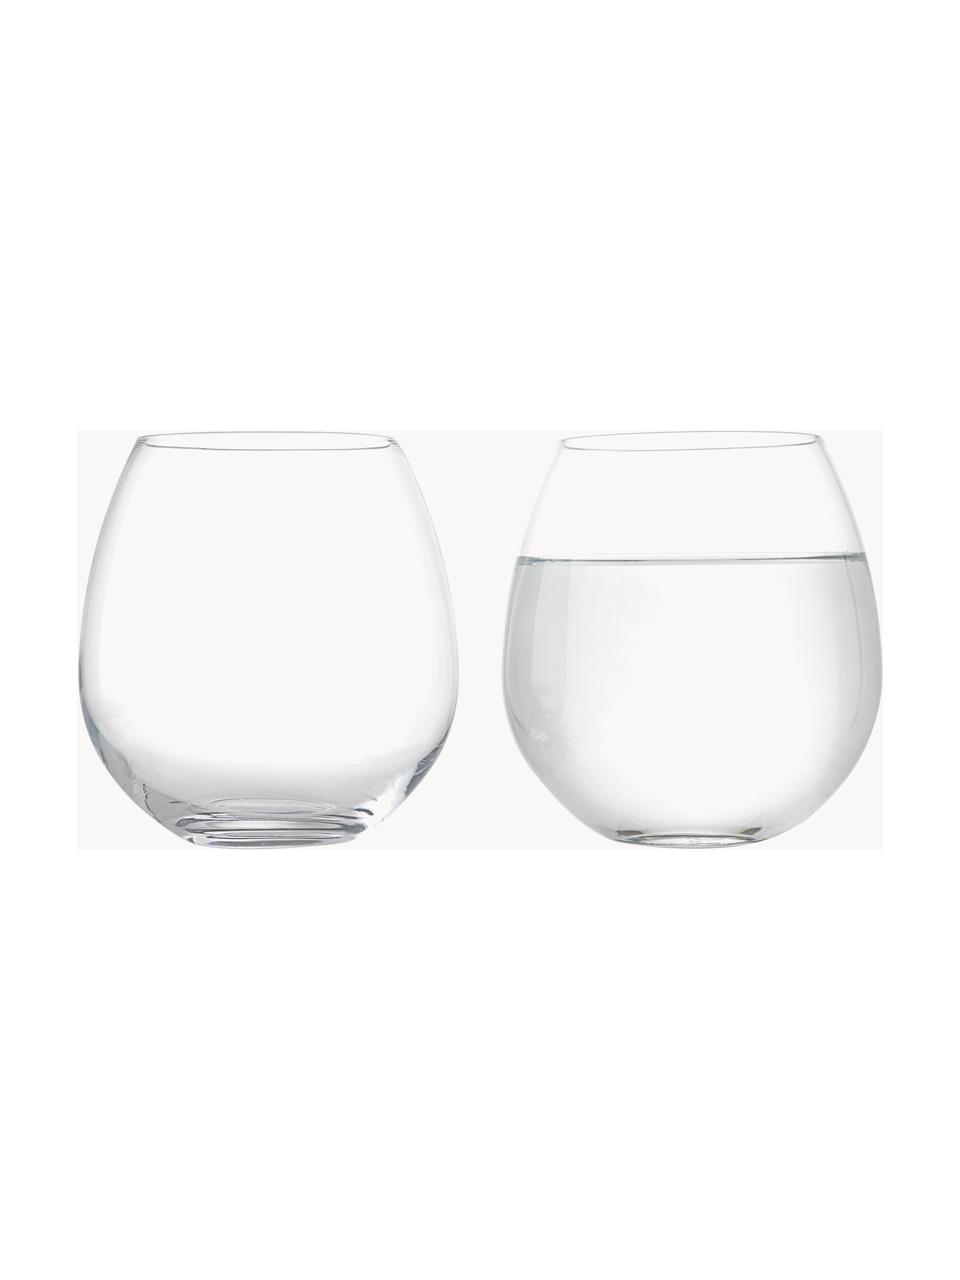 Waterglazen Premium, 2 stuks, Loodvrij glas, Transparant, Ø 10 x H 11 cm, 520 ml